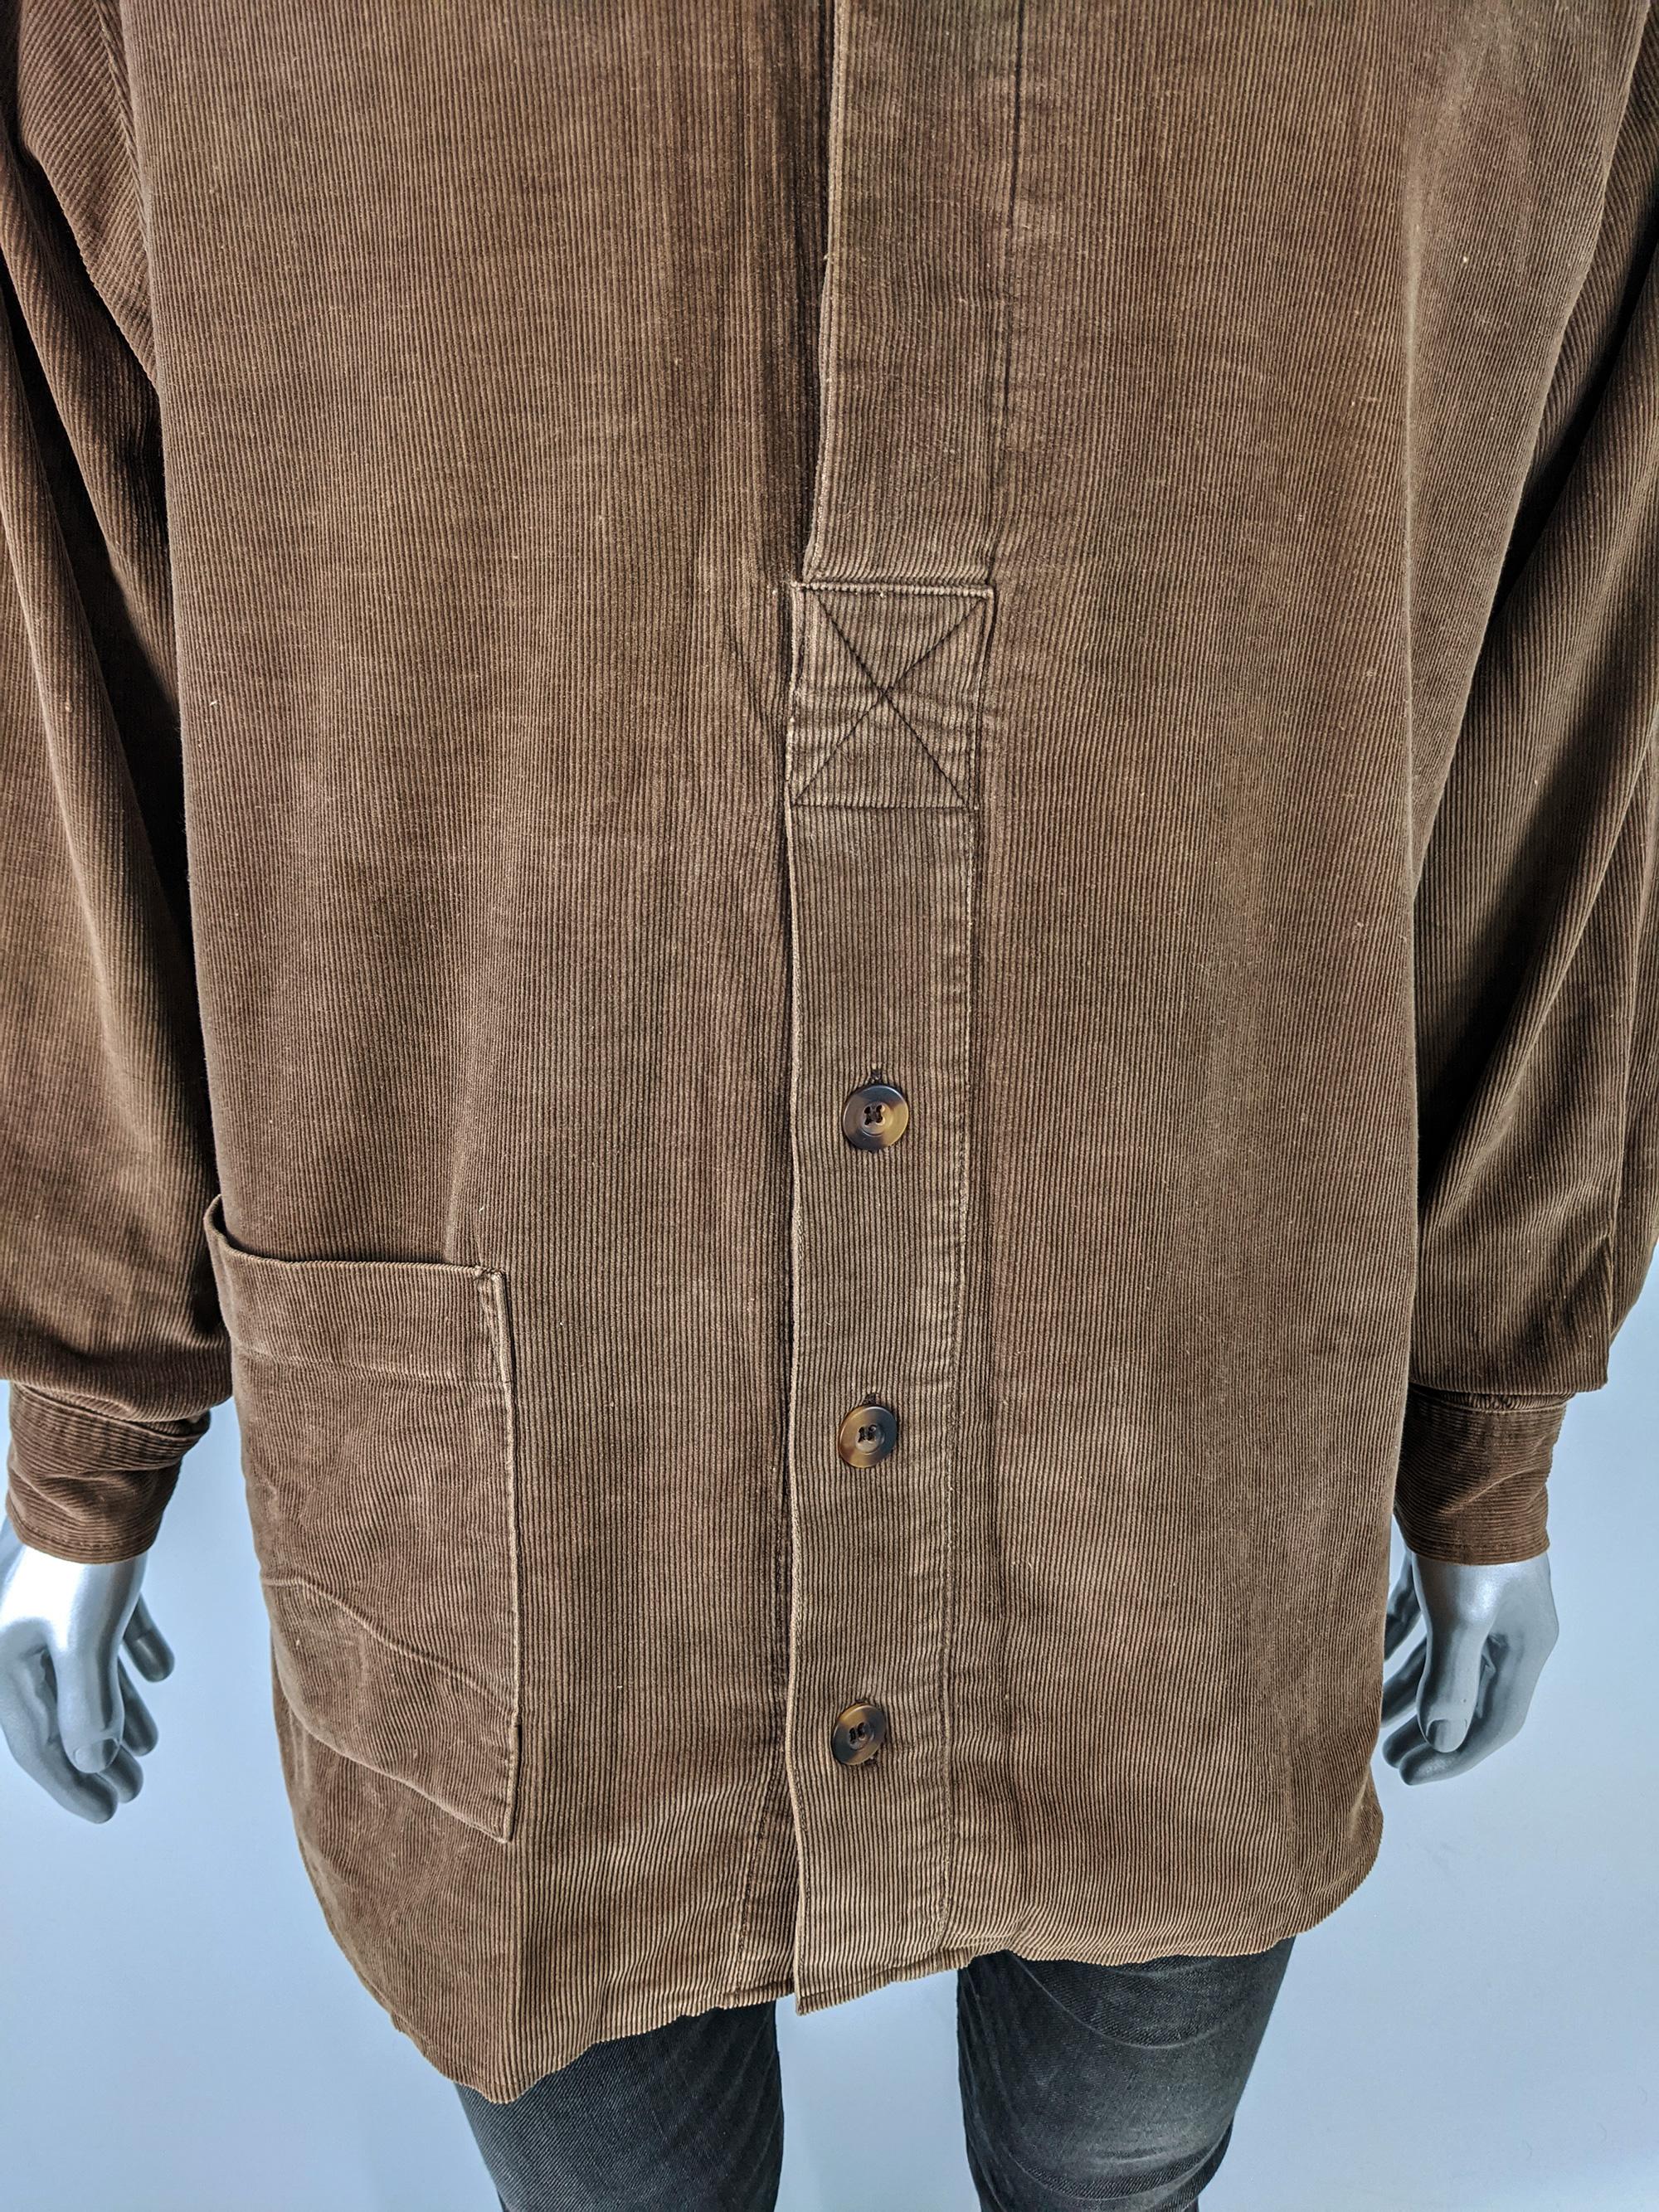 Men's Joe Casely Hayford Vintage Brown Cord Shirt, 1990s For Sale